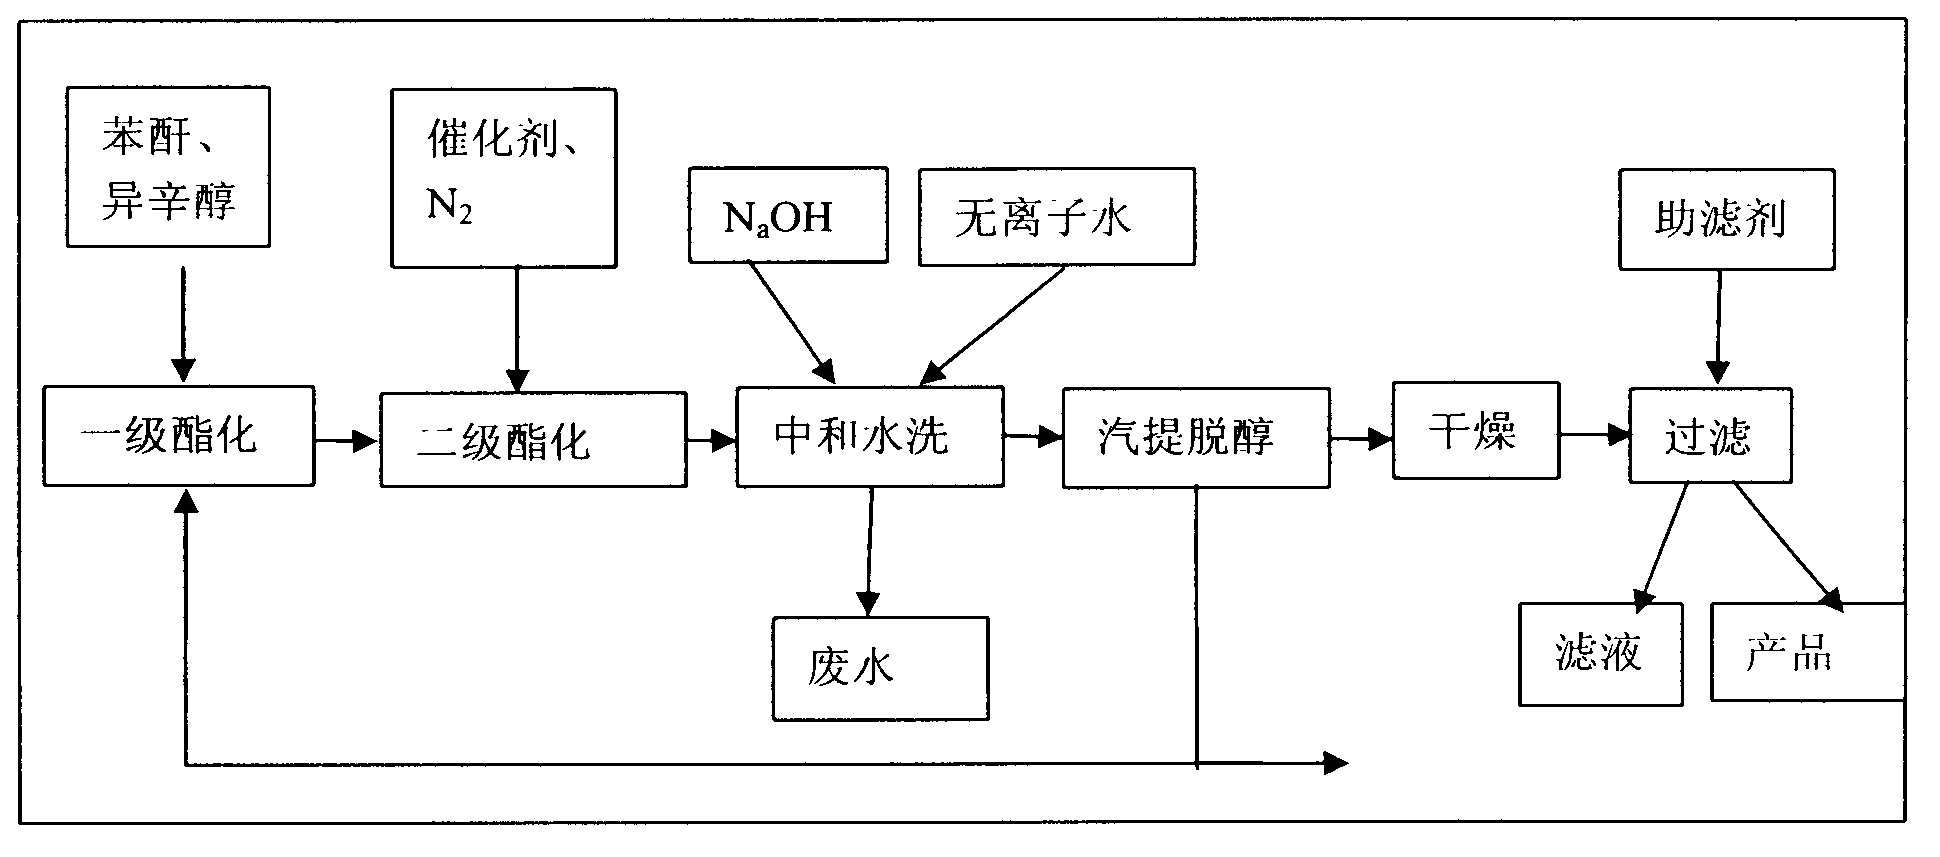 Preparation method of dioctyl phthalate (DOP)